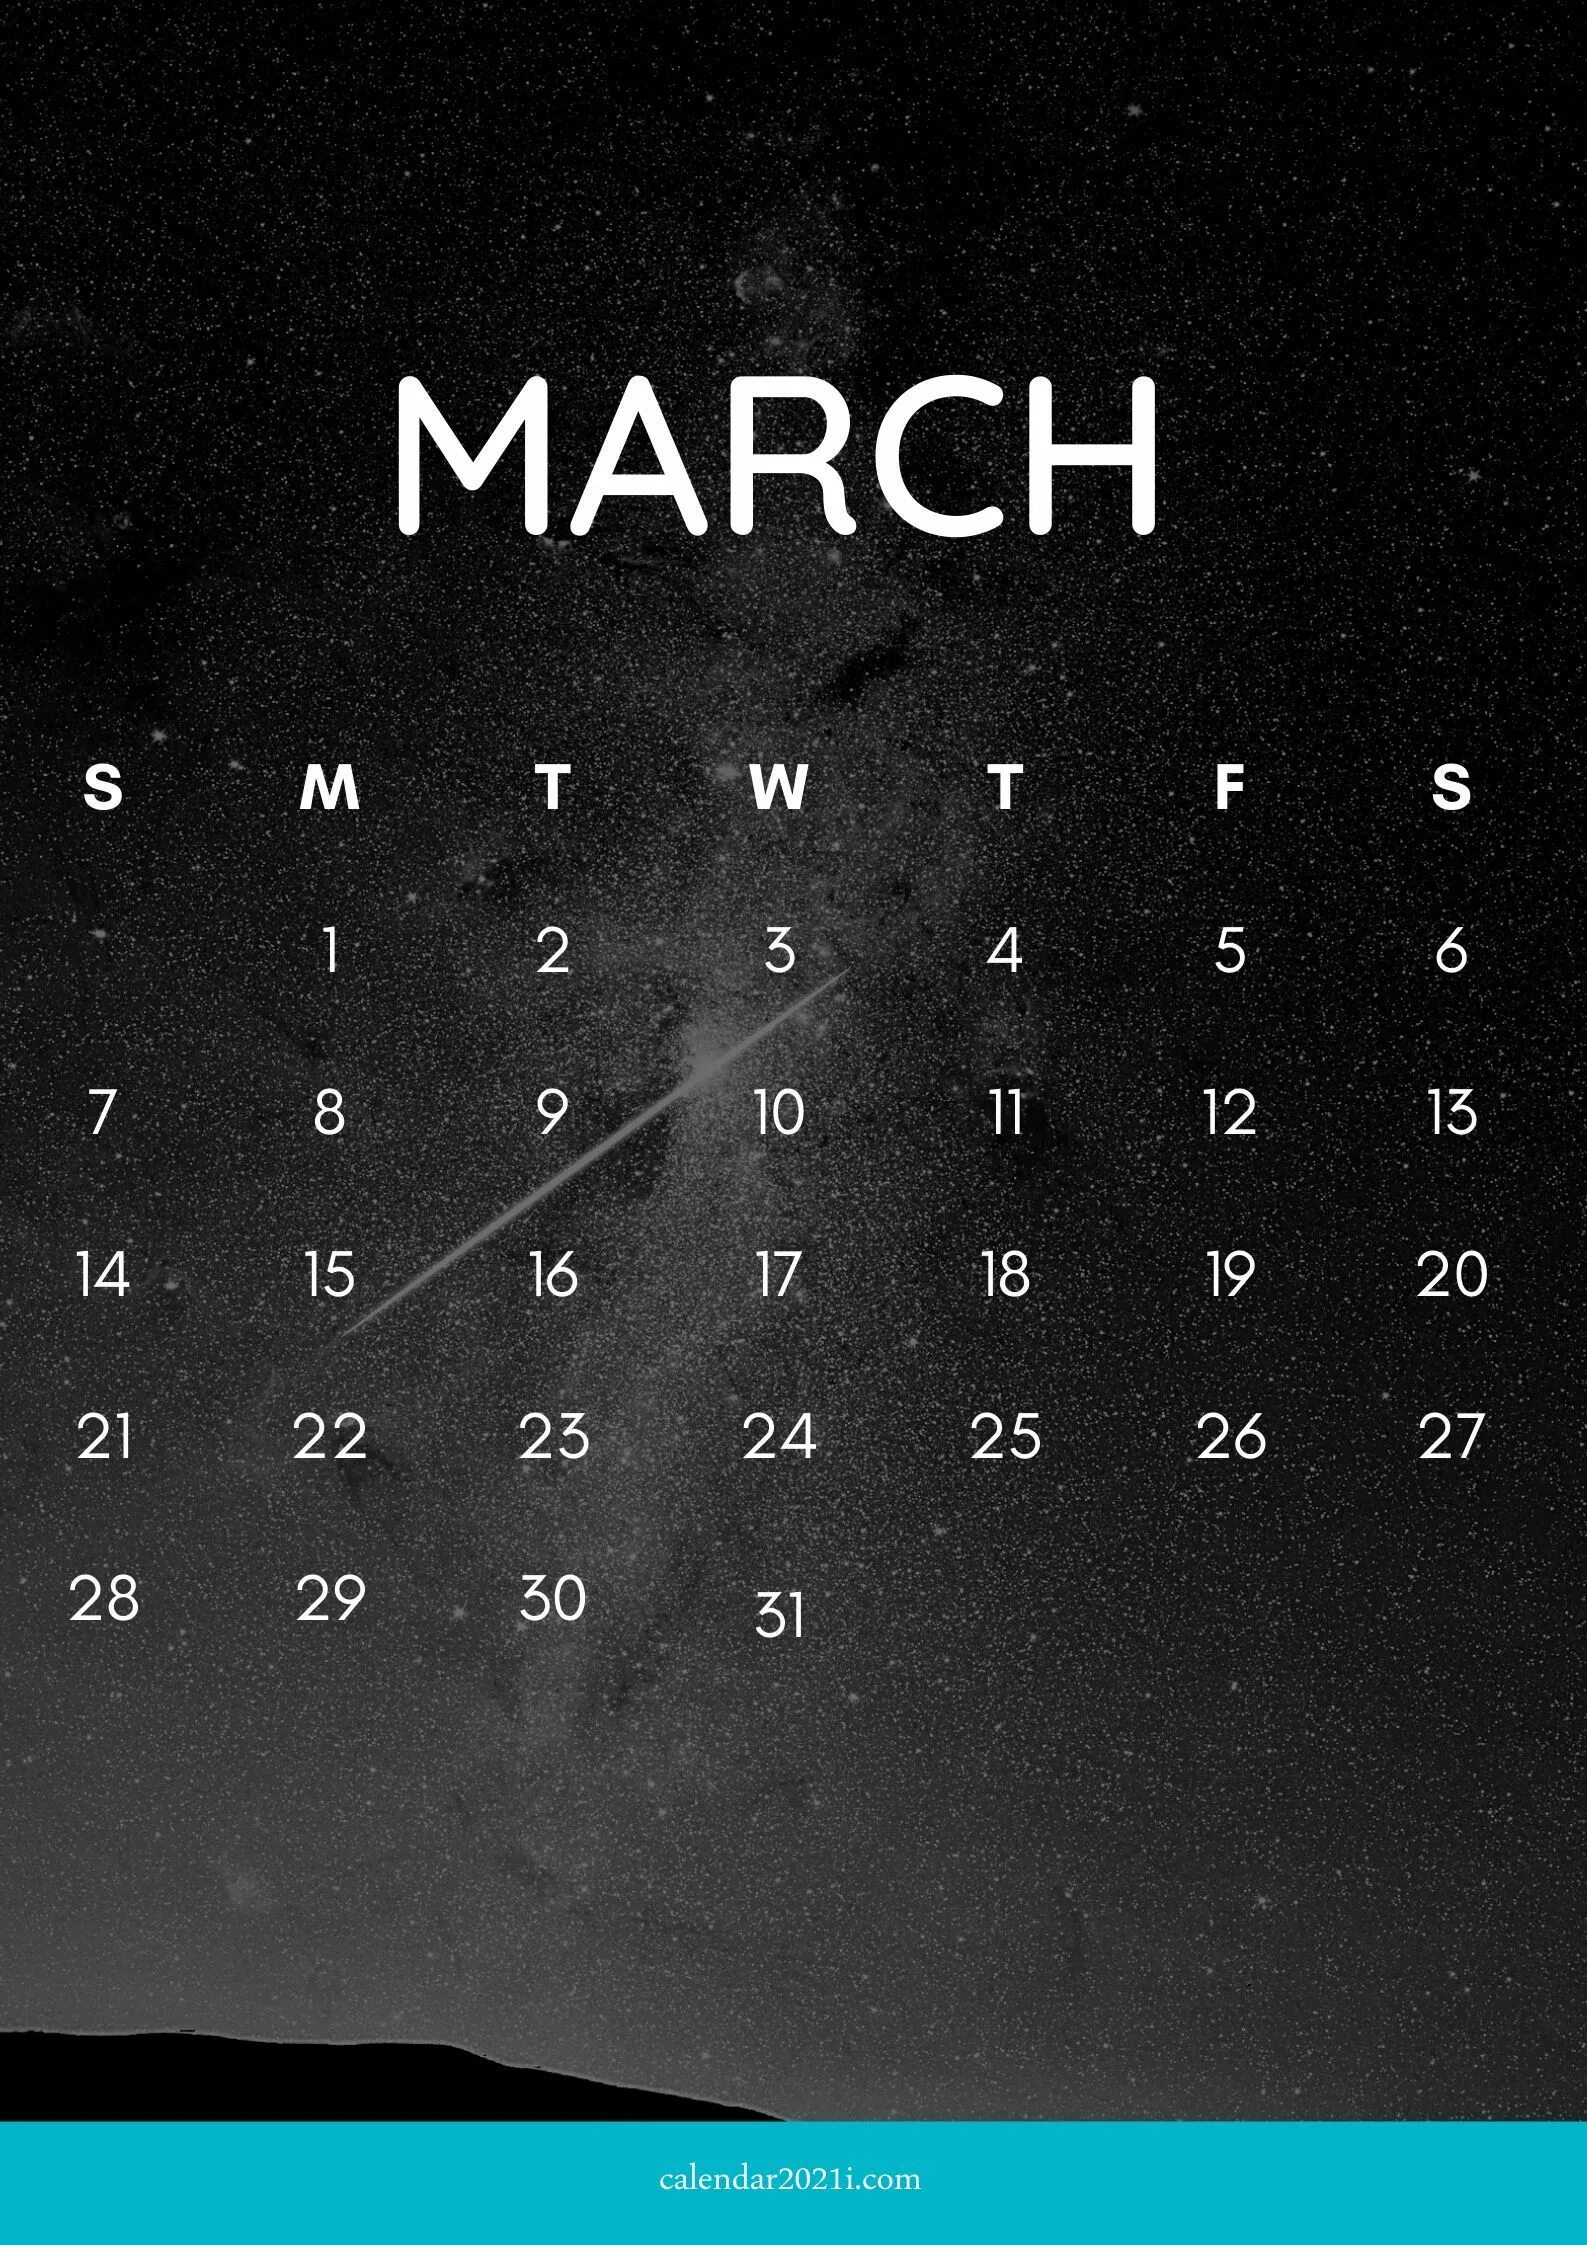 Календарь на месяц. Календарь март. Календарь 2021 айфон. Заставка на айфон календарь.